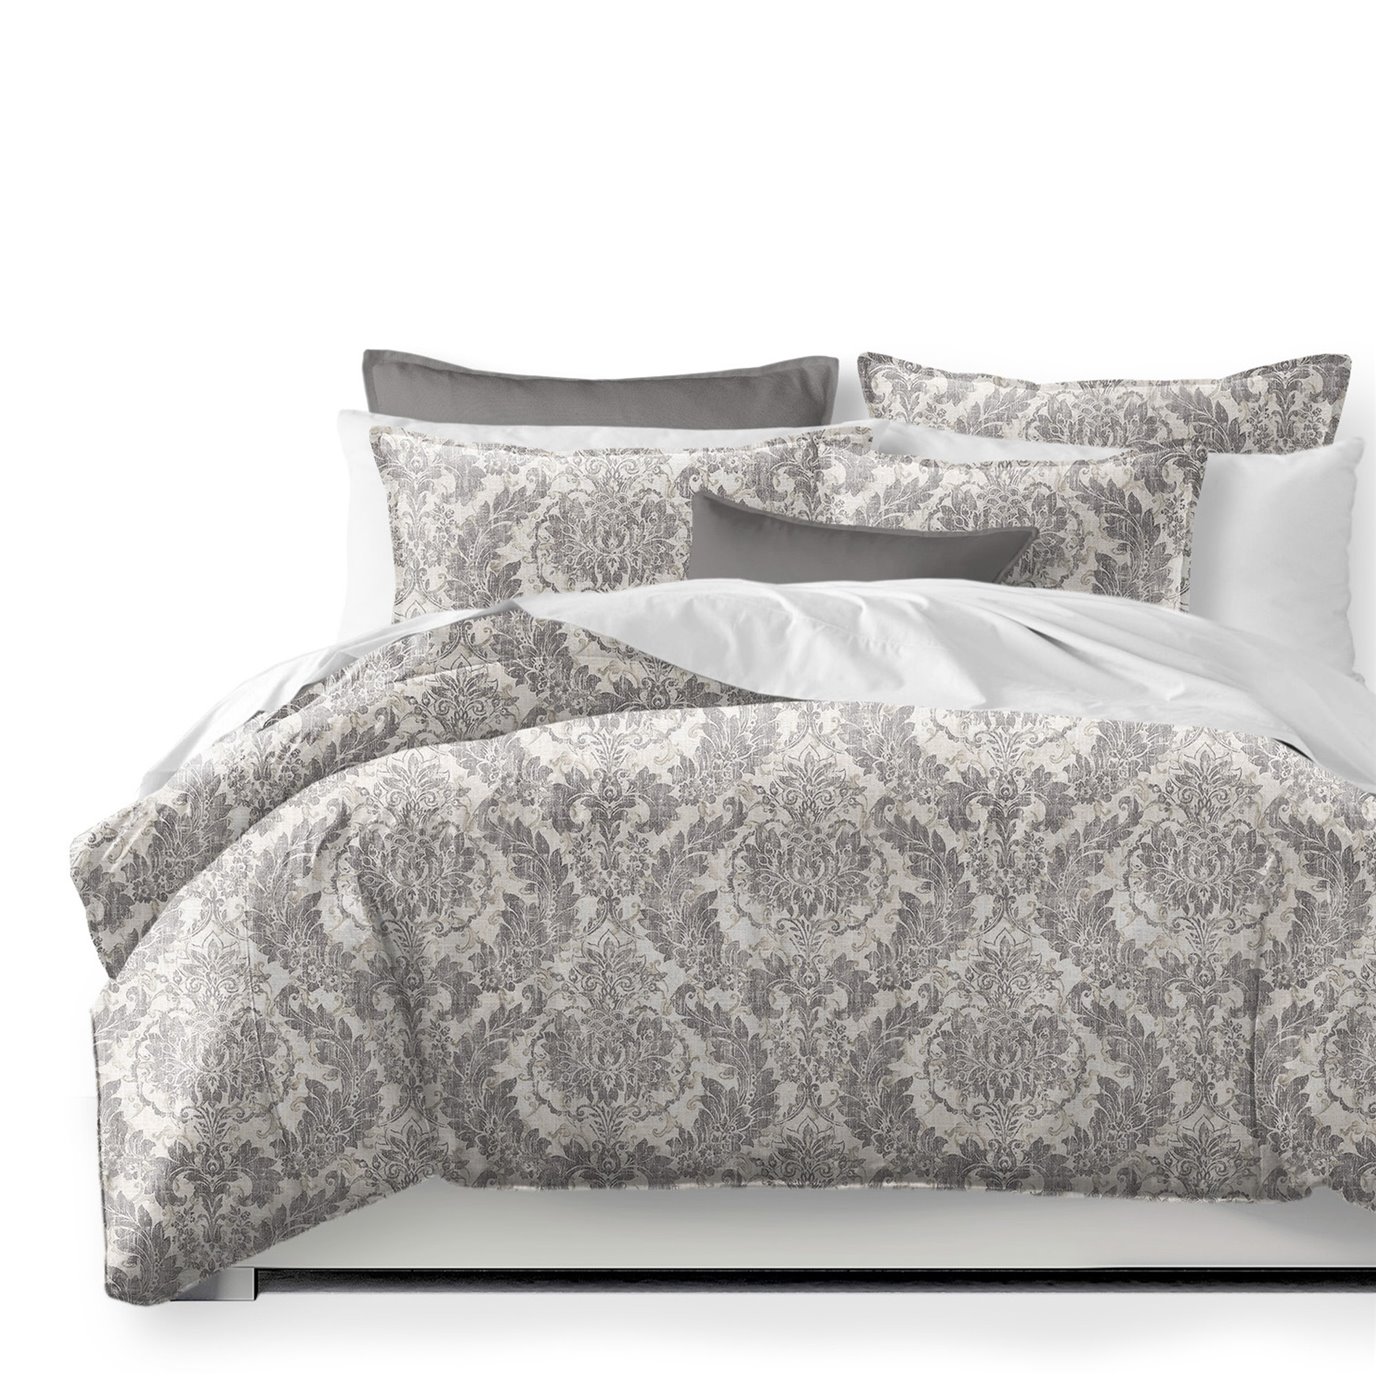 Damaskus Linen Graphite Coverlet and Pillow Sham(s) Set - Size Queen